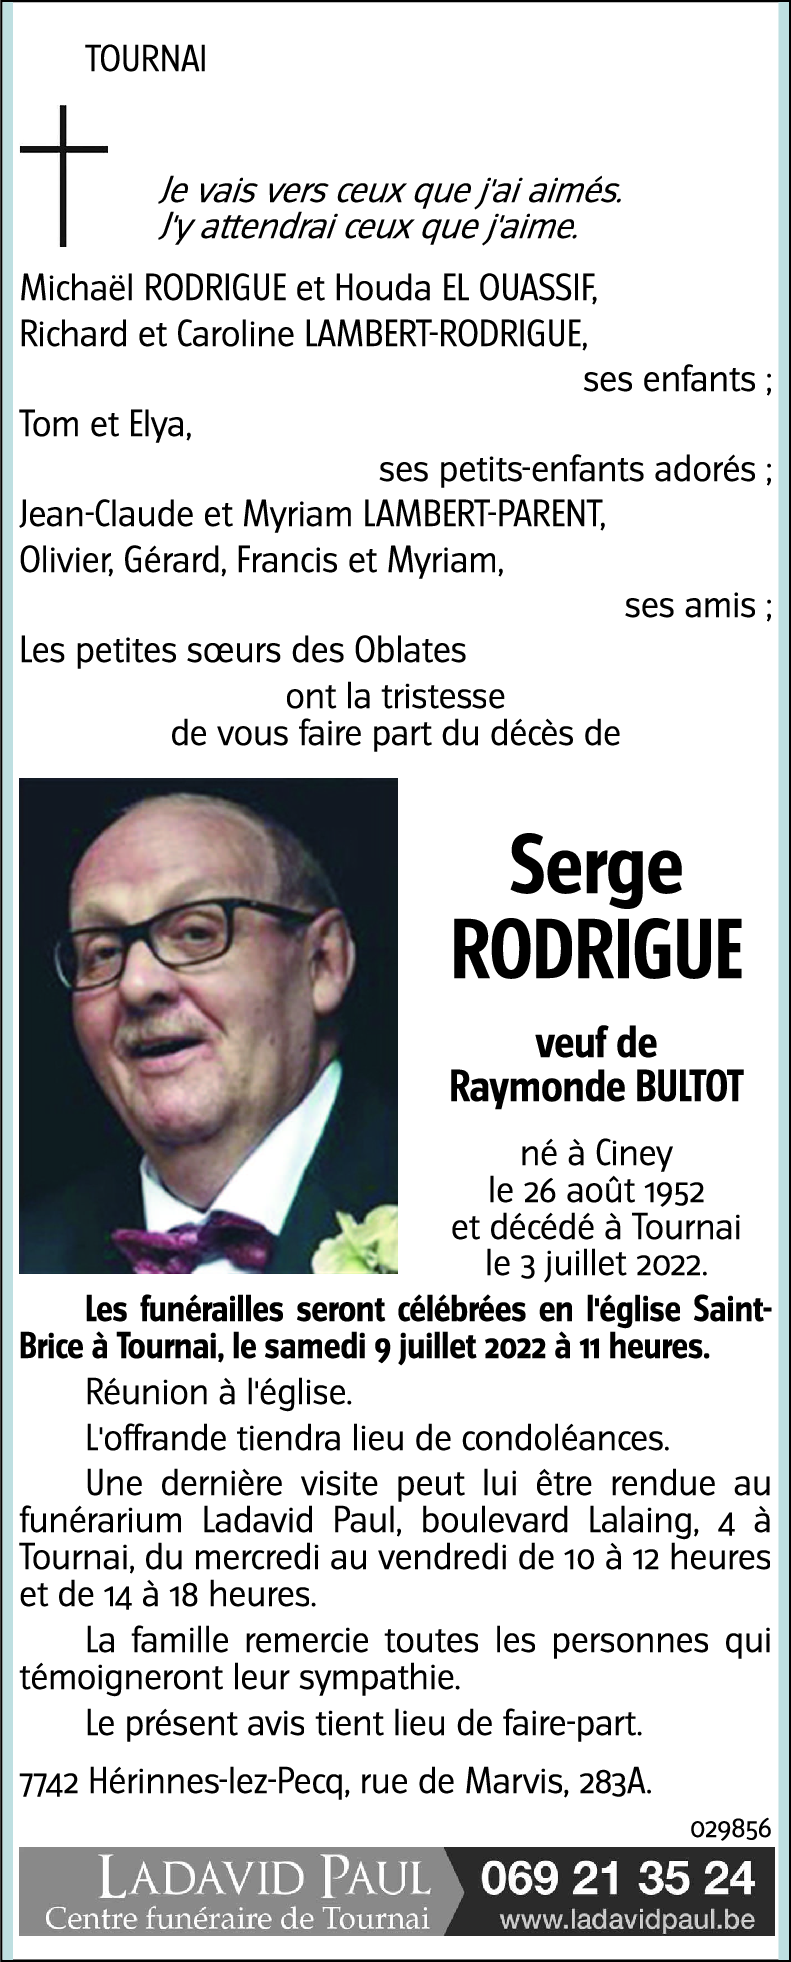 Serge RODRIGUE